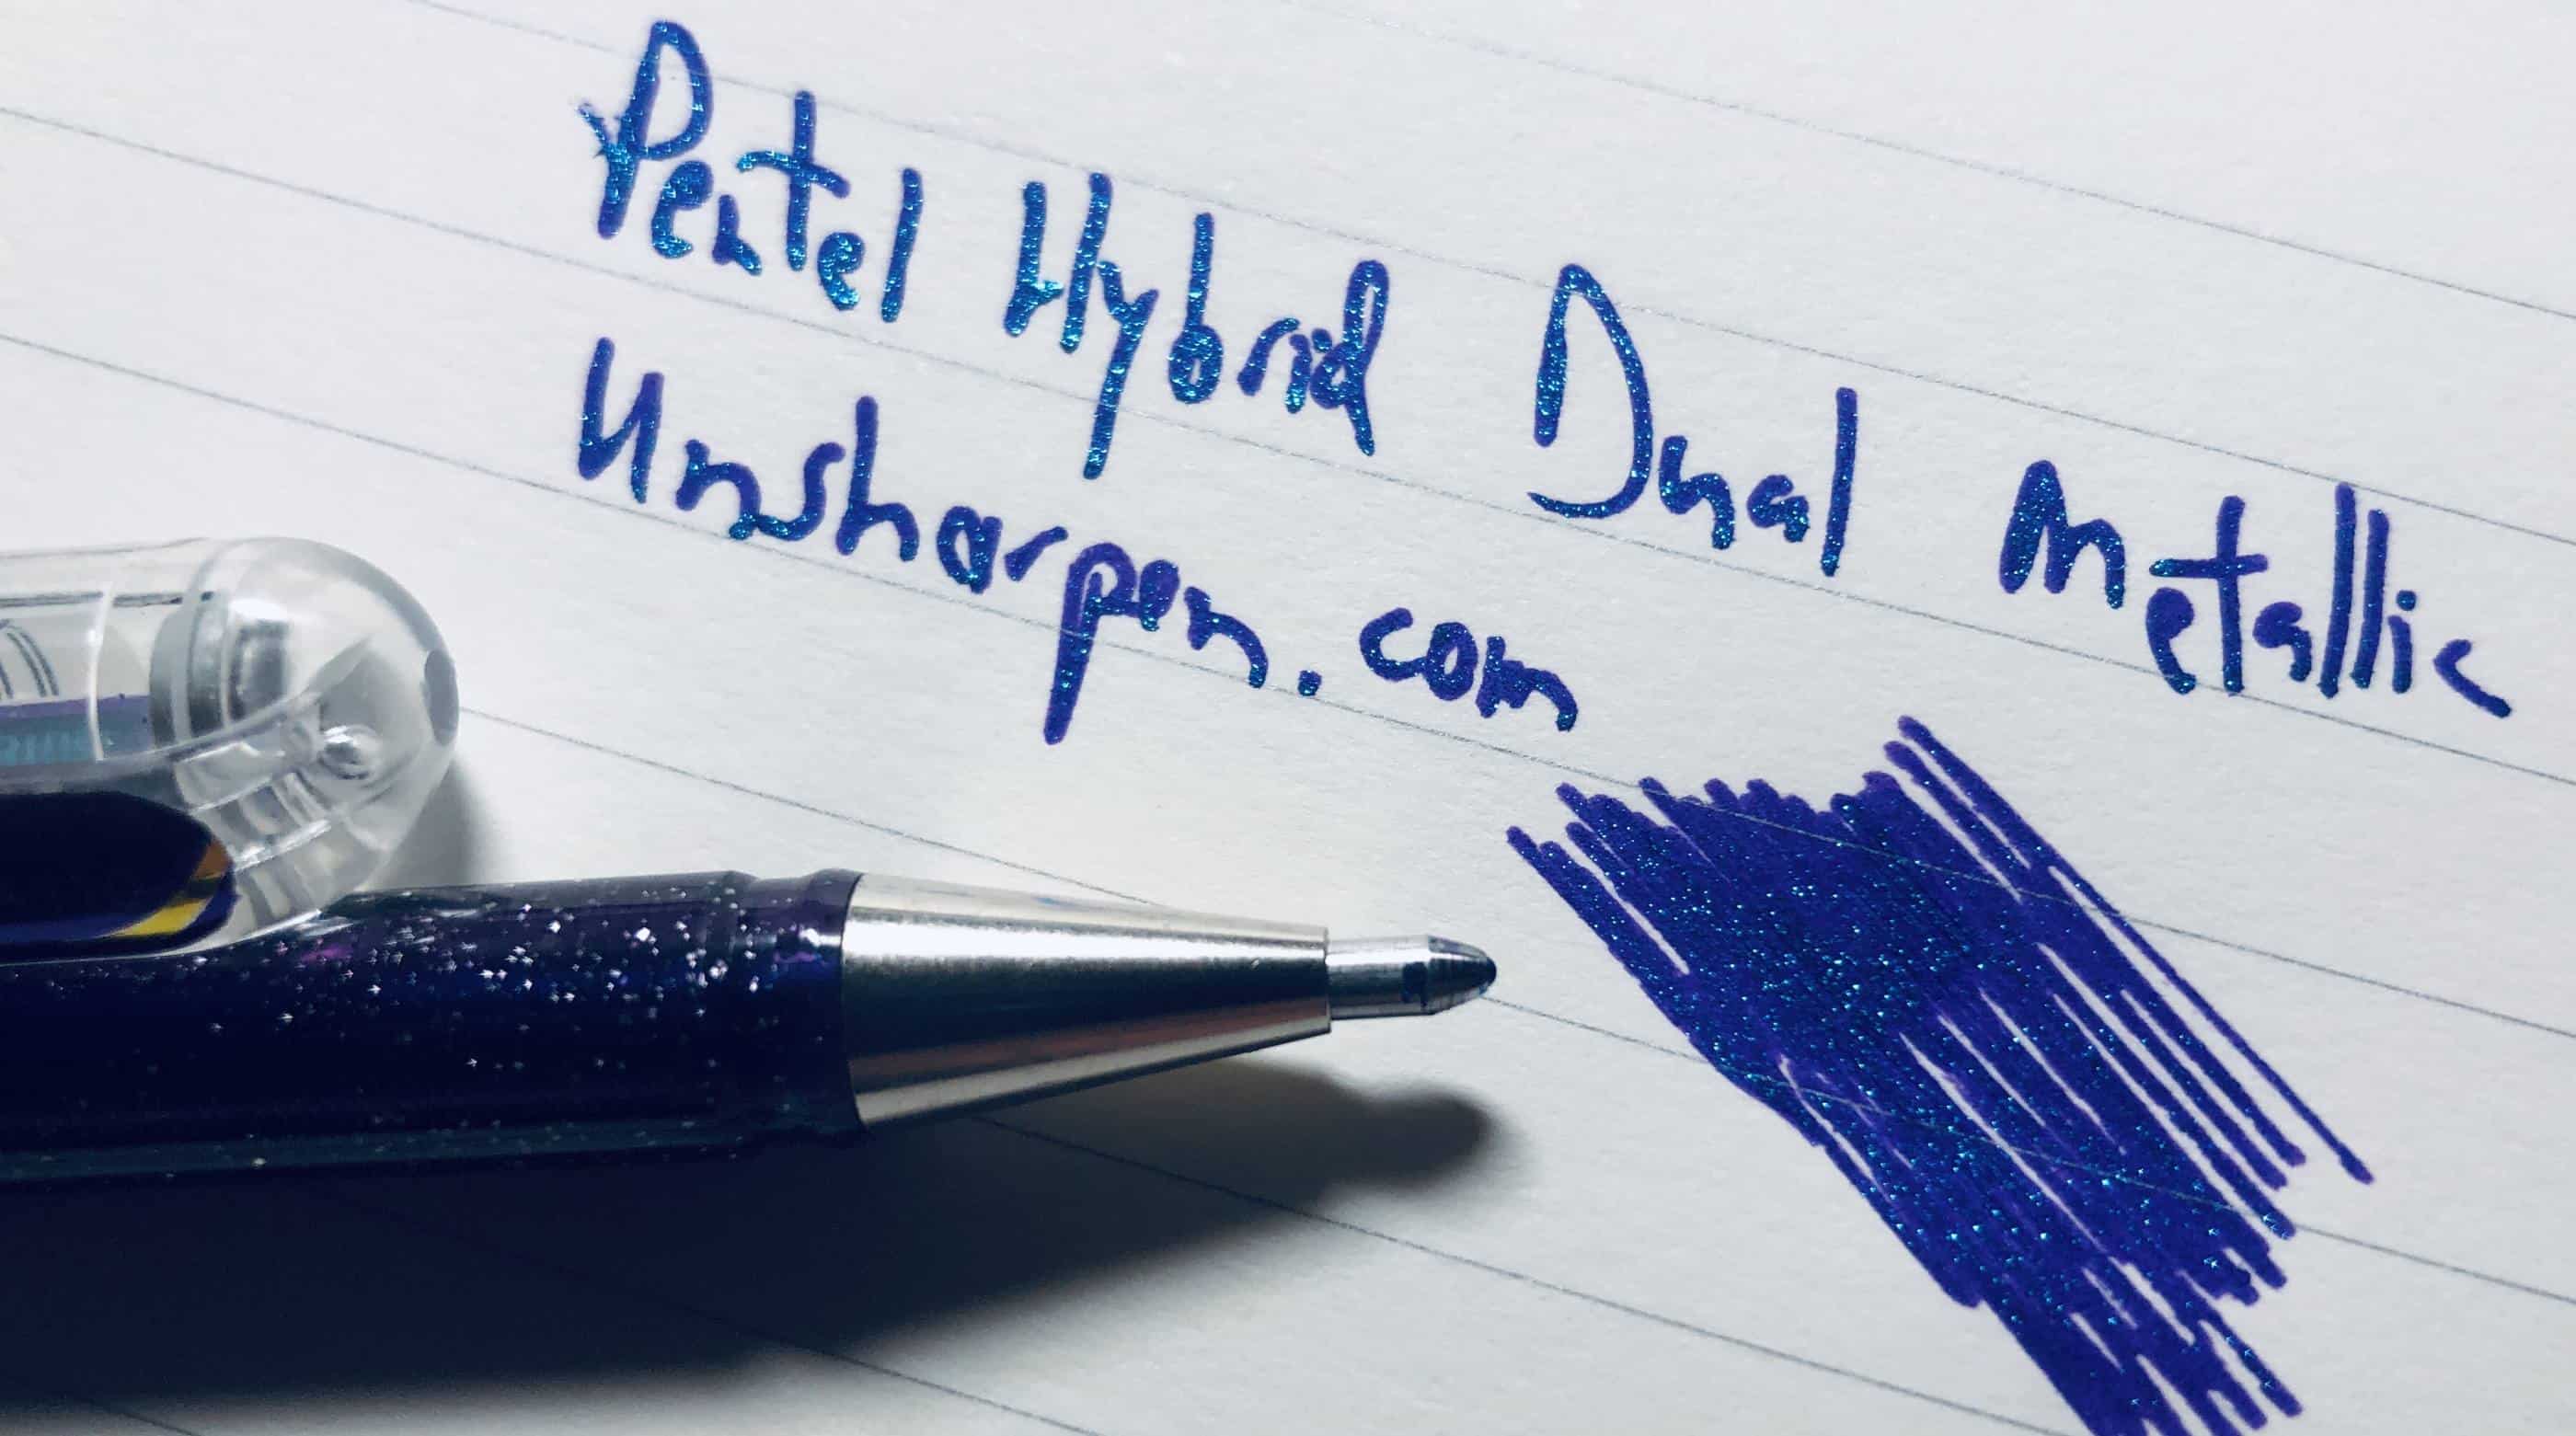 Pentel Sparkle Pop Metallic Gel Pens Bold Pen Point - Assorted Gel-based  Ink - Metal Tip - 8 / Pack 